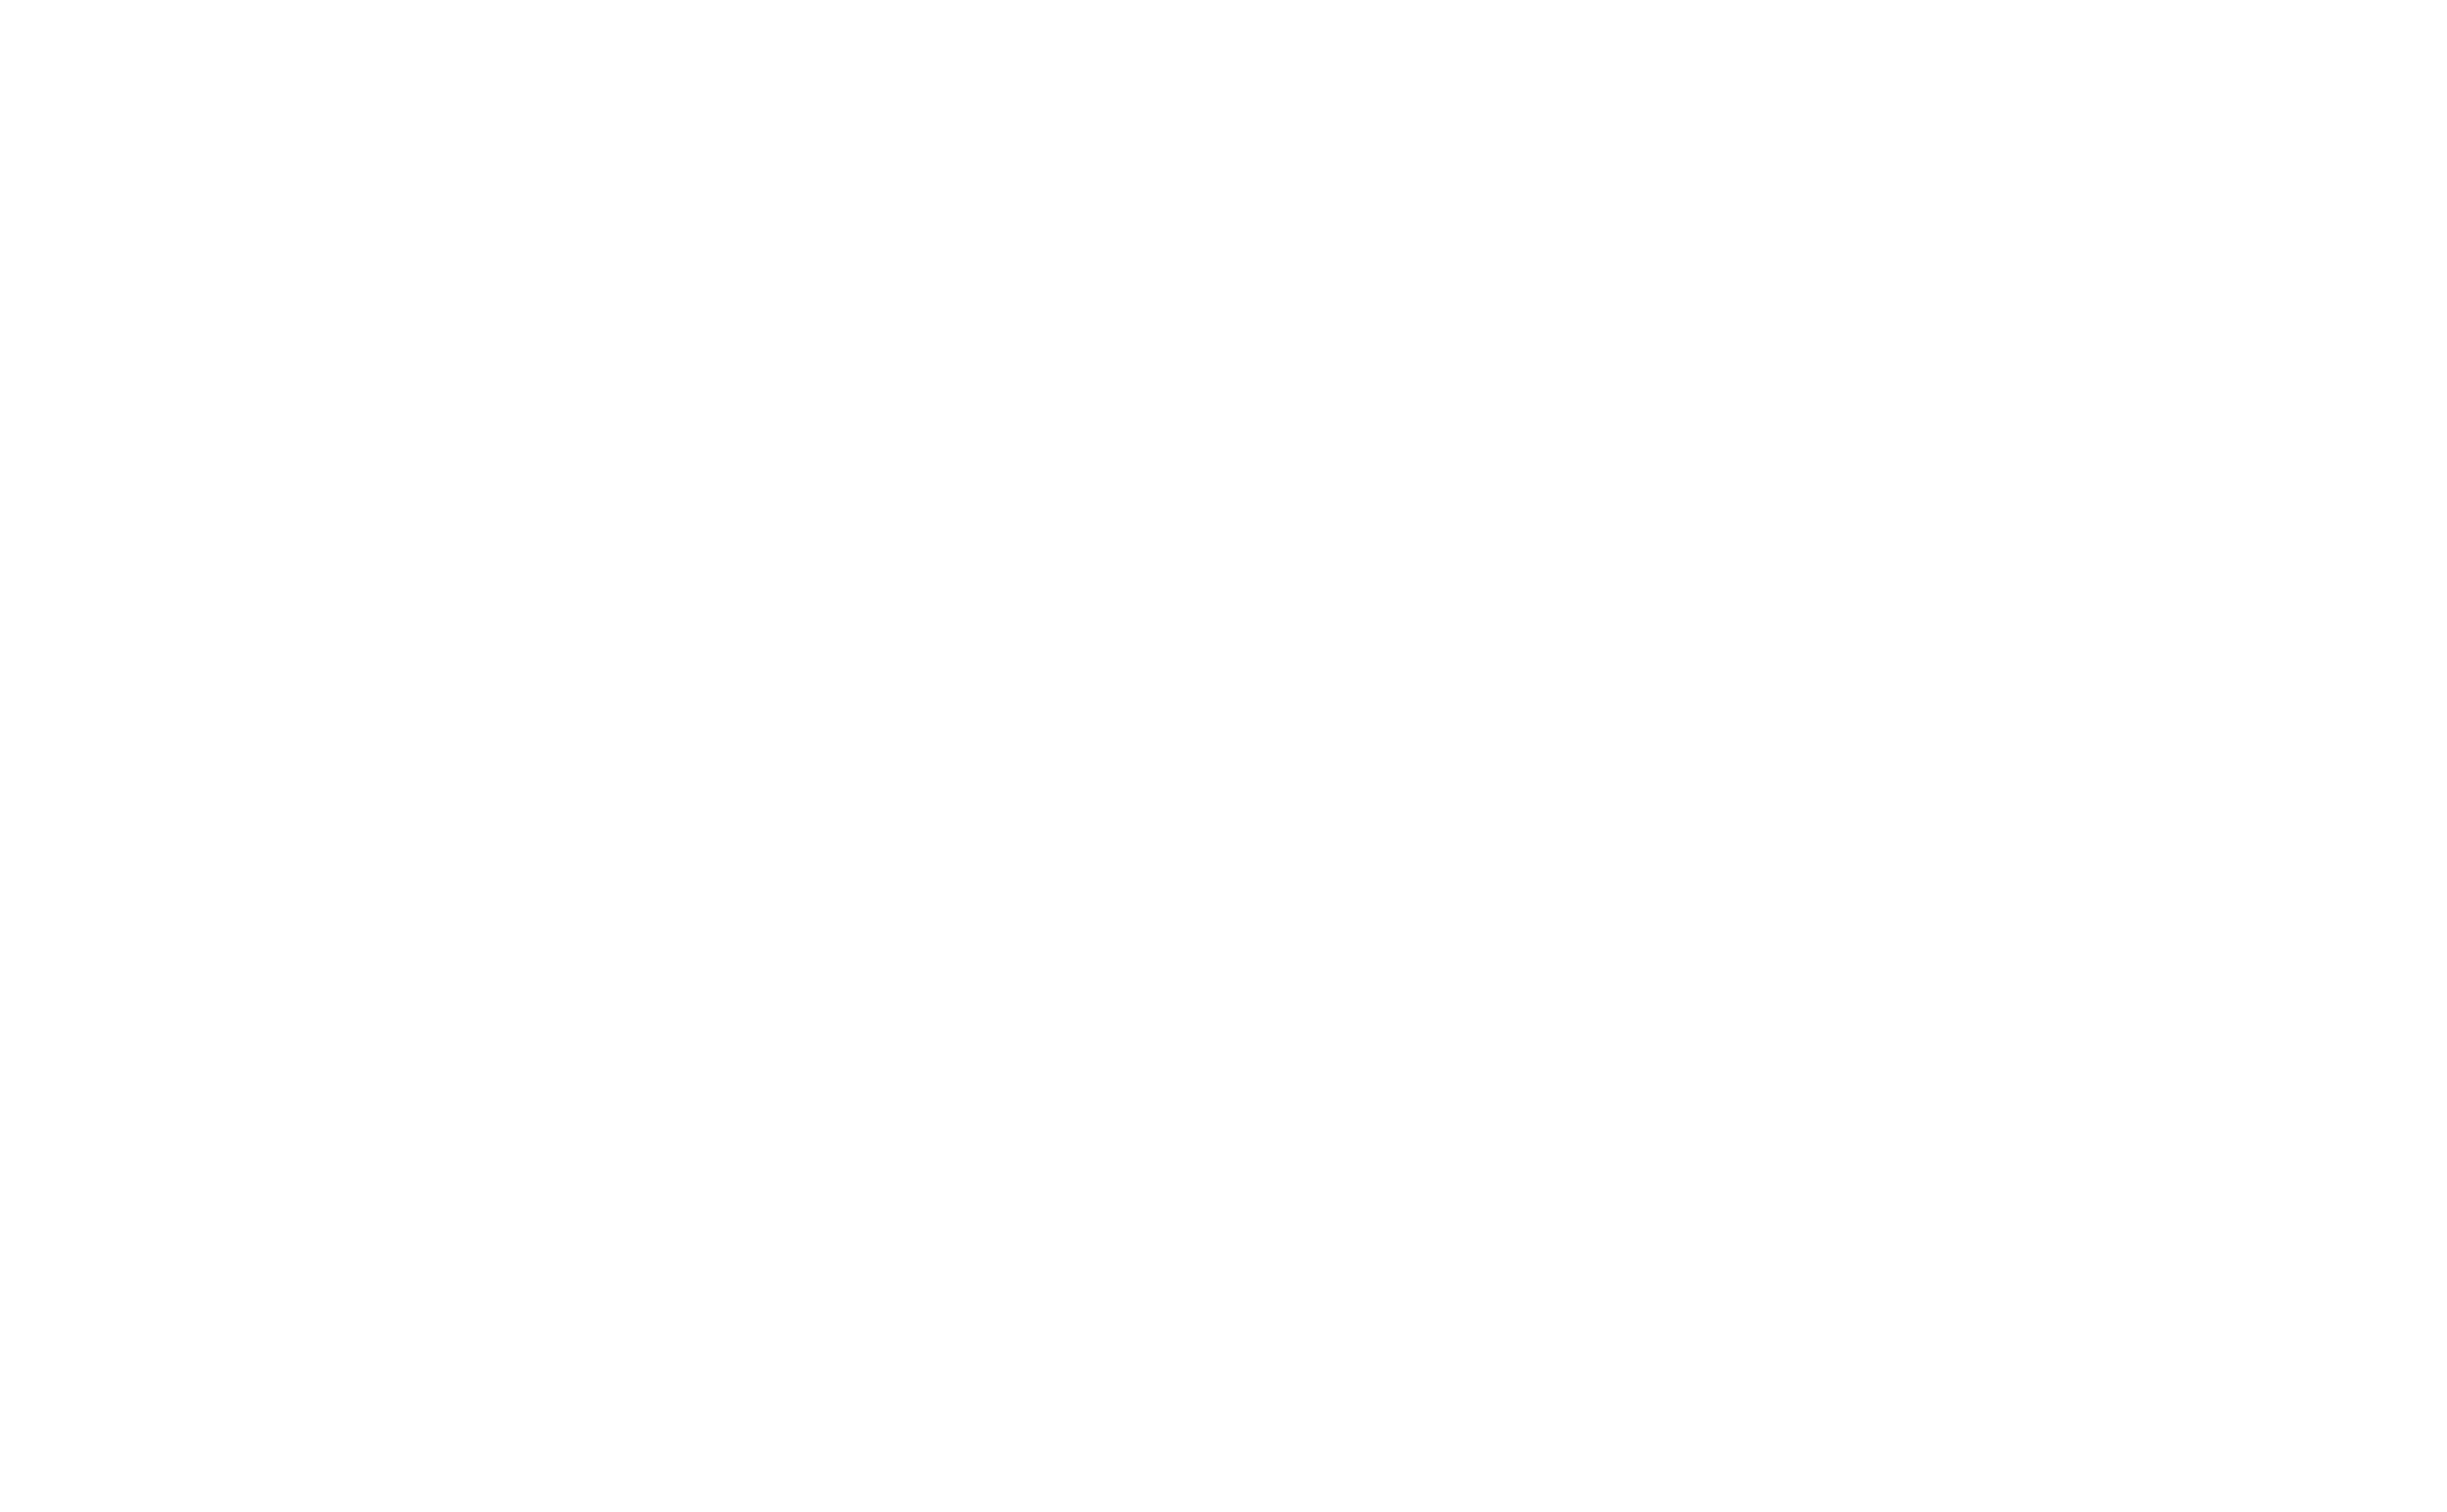 Polygon Coaching